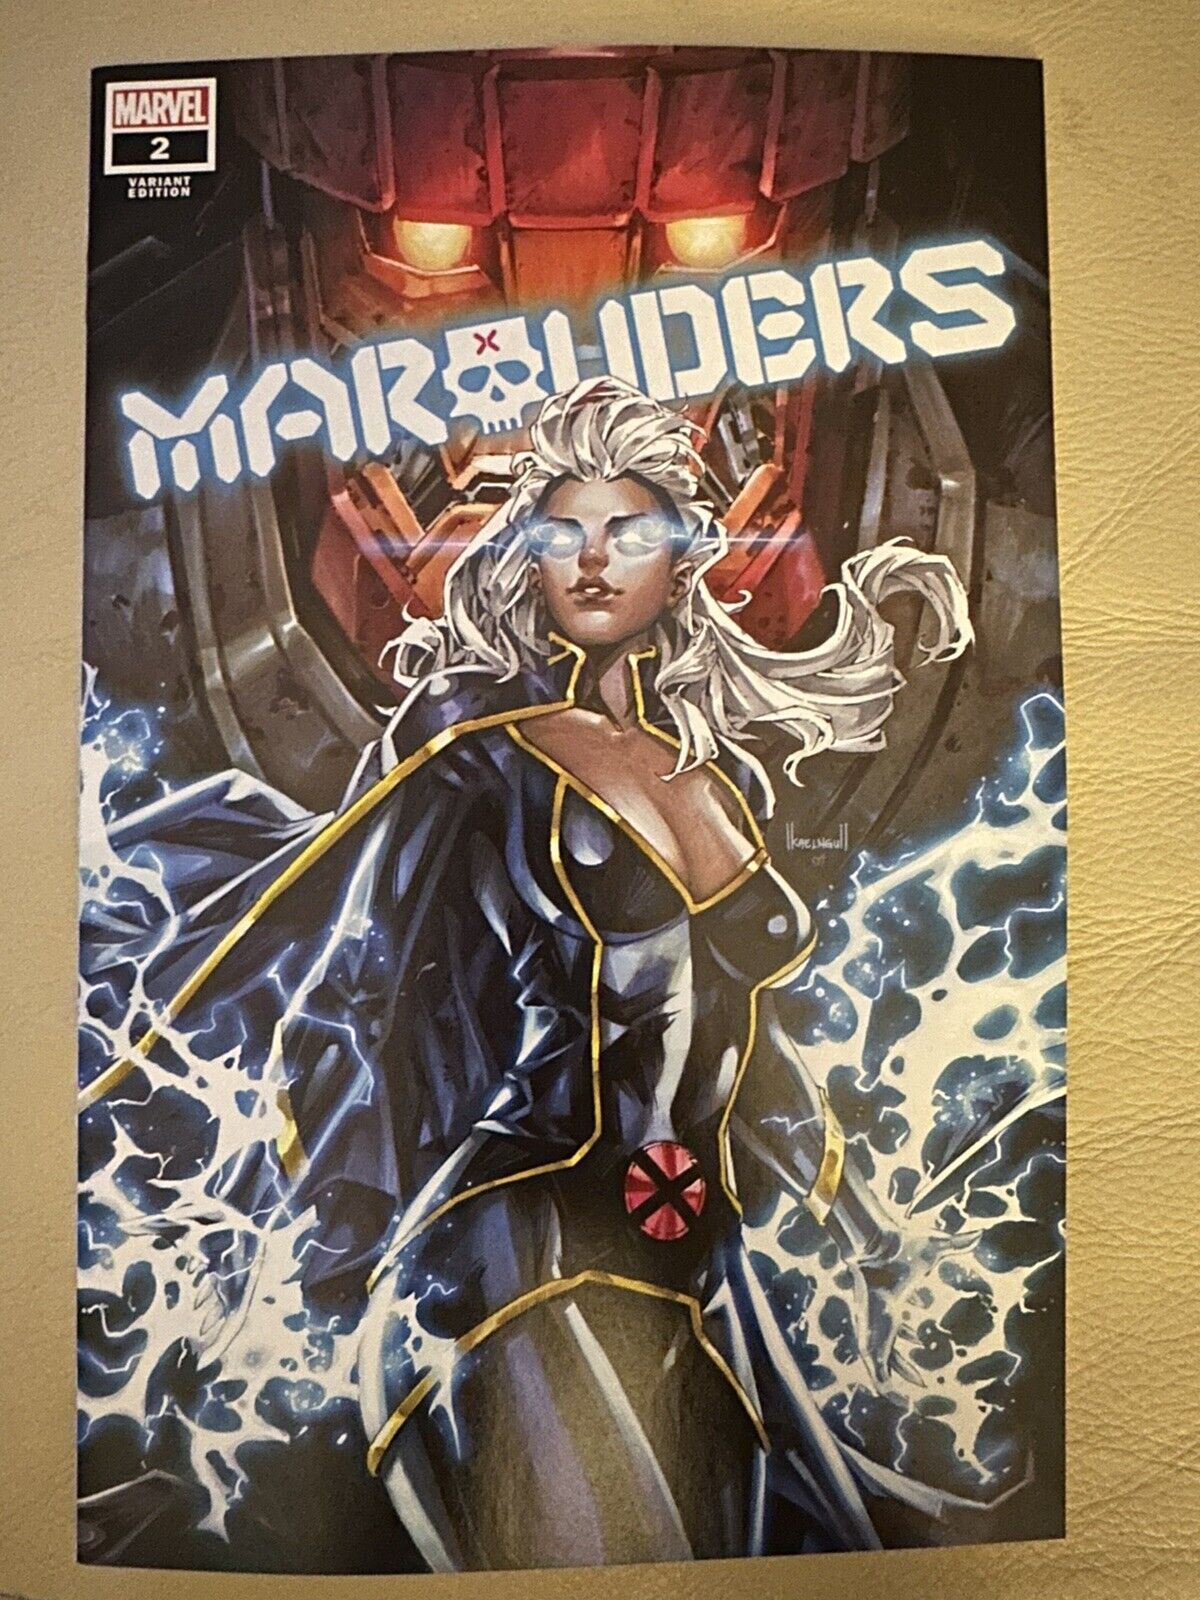 MARAUDERS #2 KAEL NGU Trade Dress VARIANT COVER Marvel Comics Book 2020 key Rare